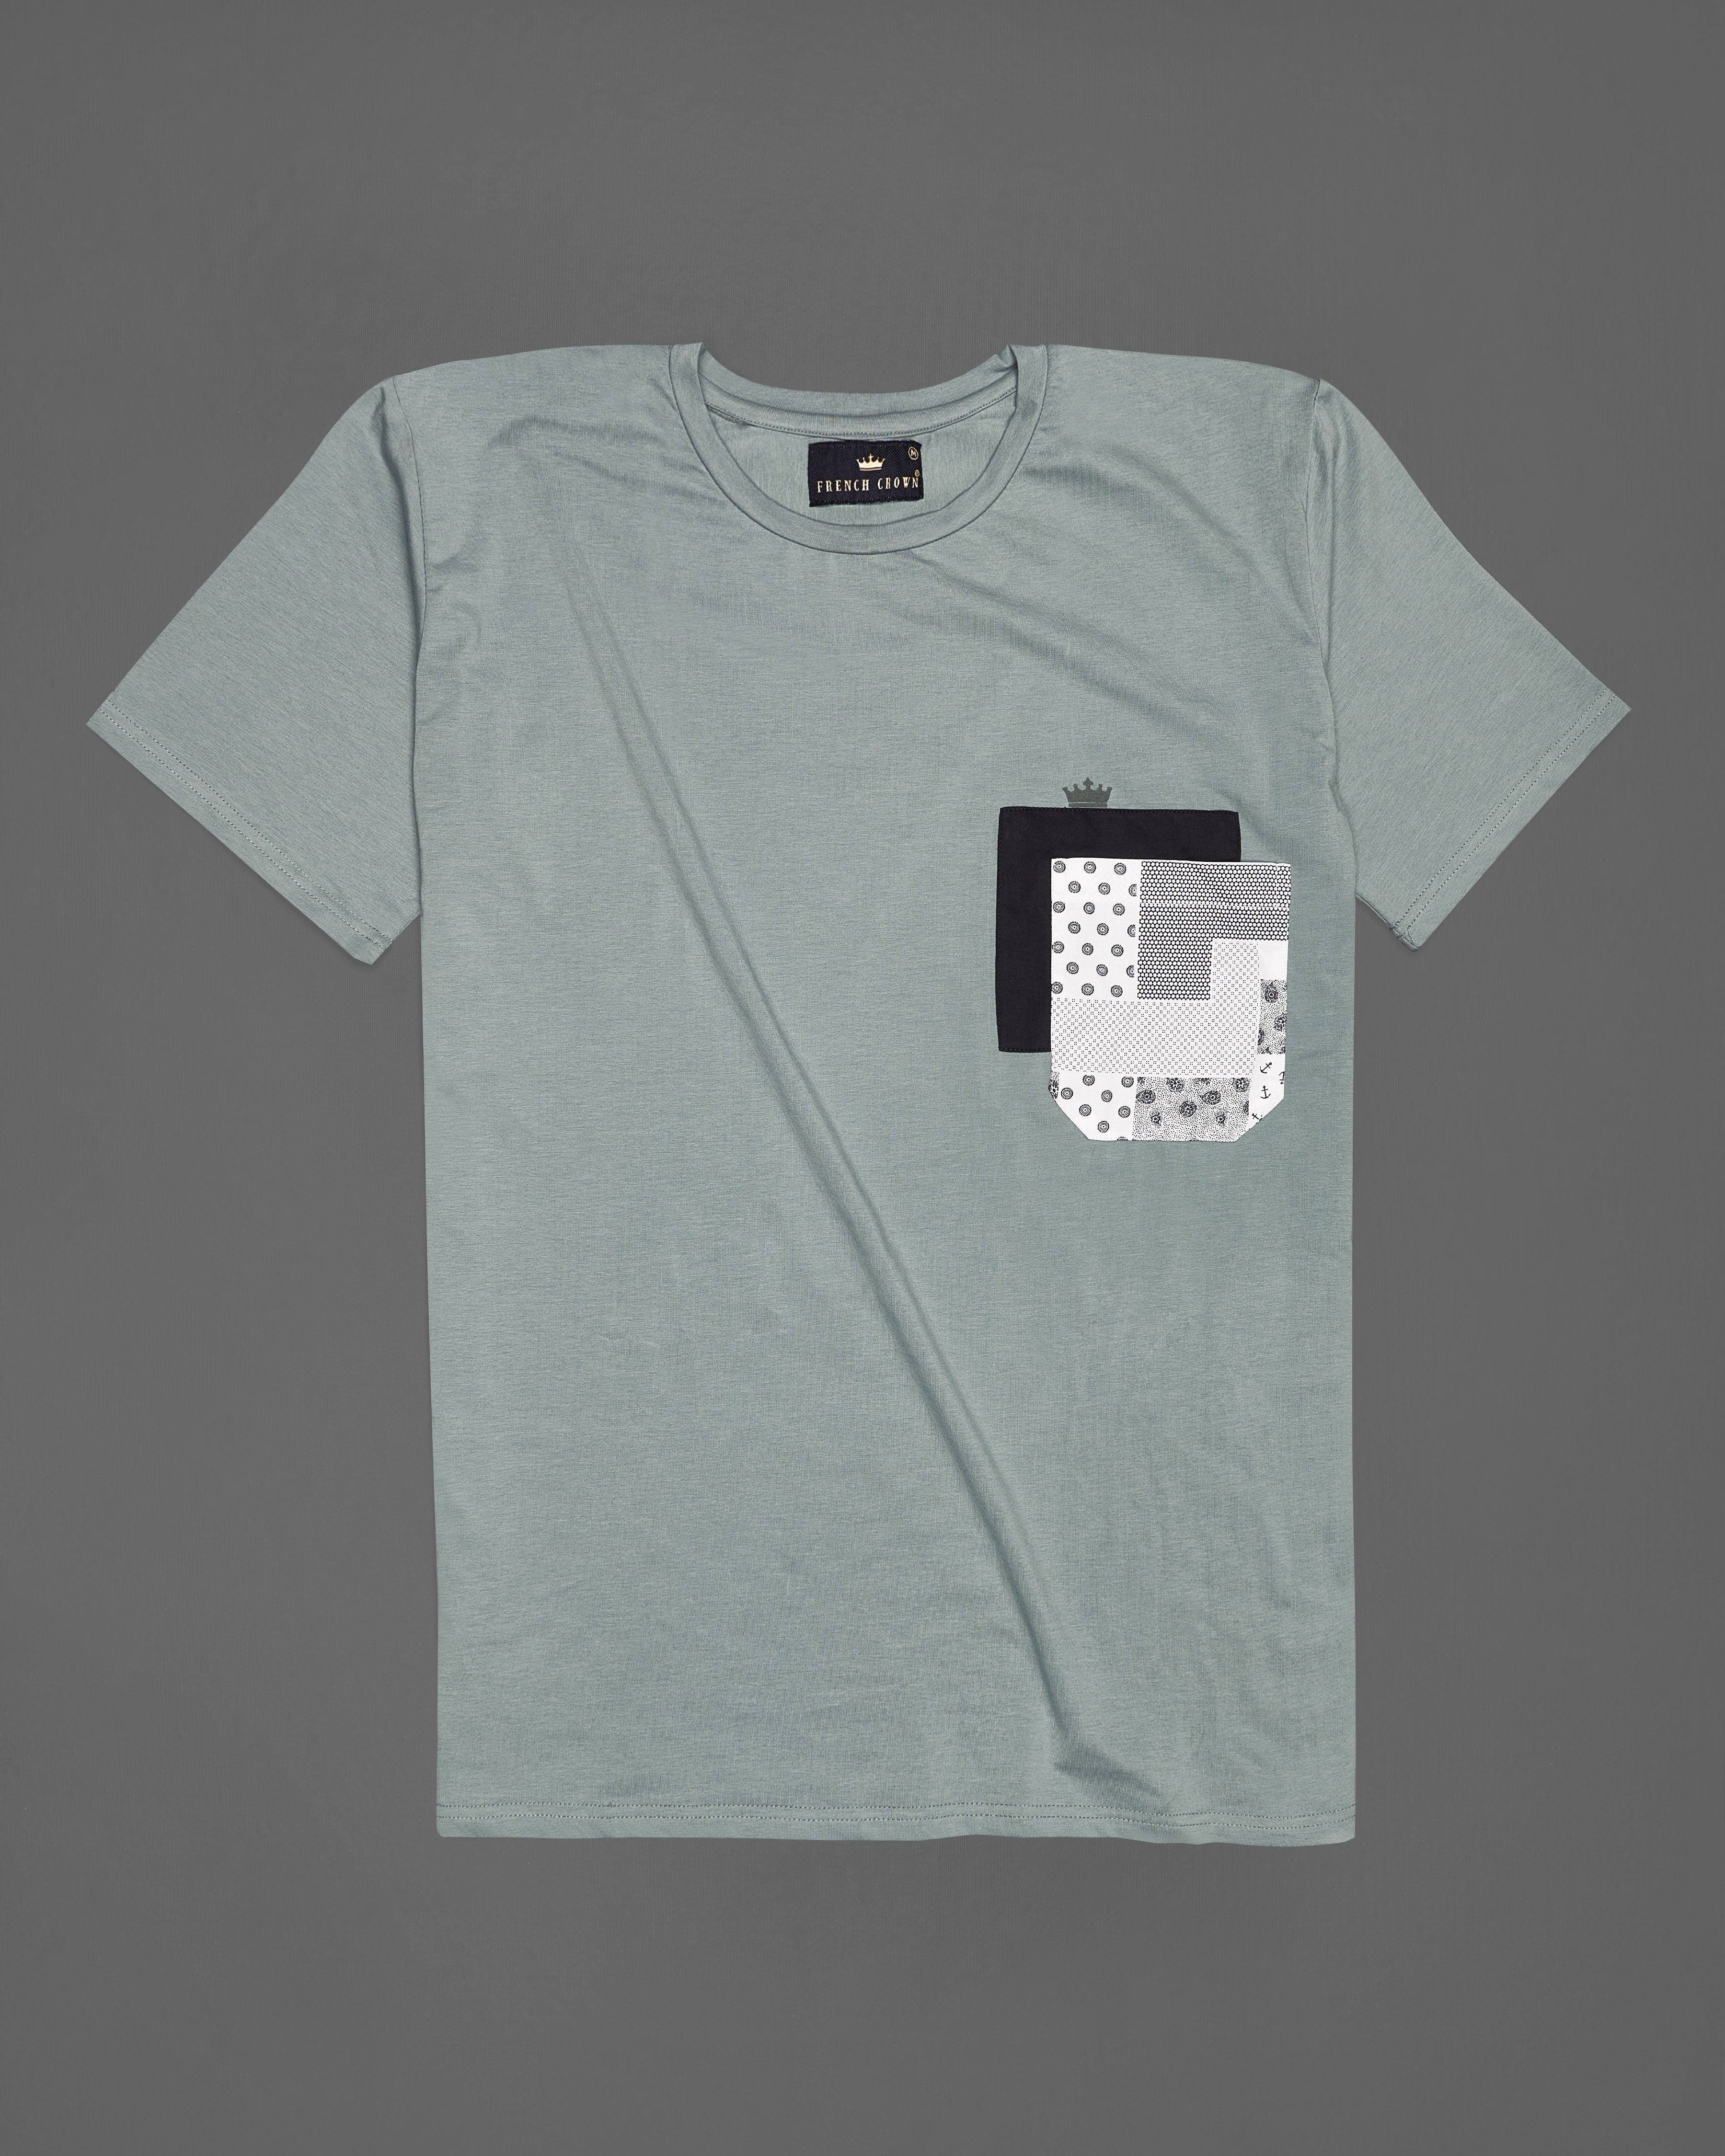 Dawn Gray with Black and White Patch Pocket Premium Organic Cotton Designer T-shirt TS009-W01-S, TS009-W01-M, TS009-W01-L, TS009-W01-XL, TS009-W01-XXL